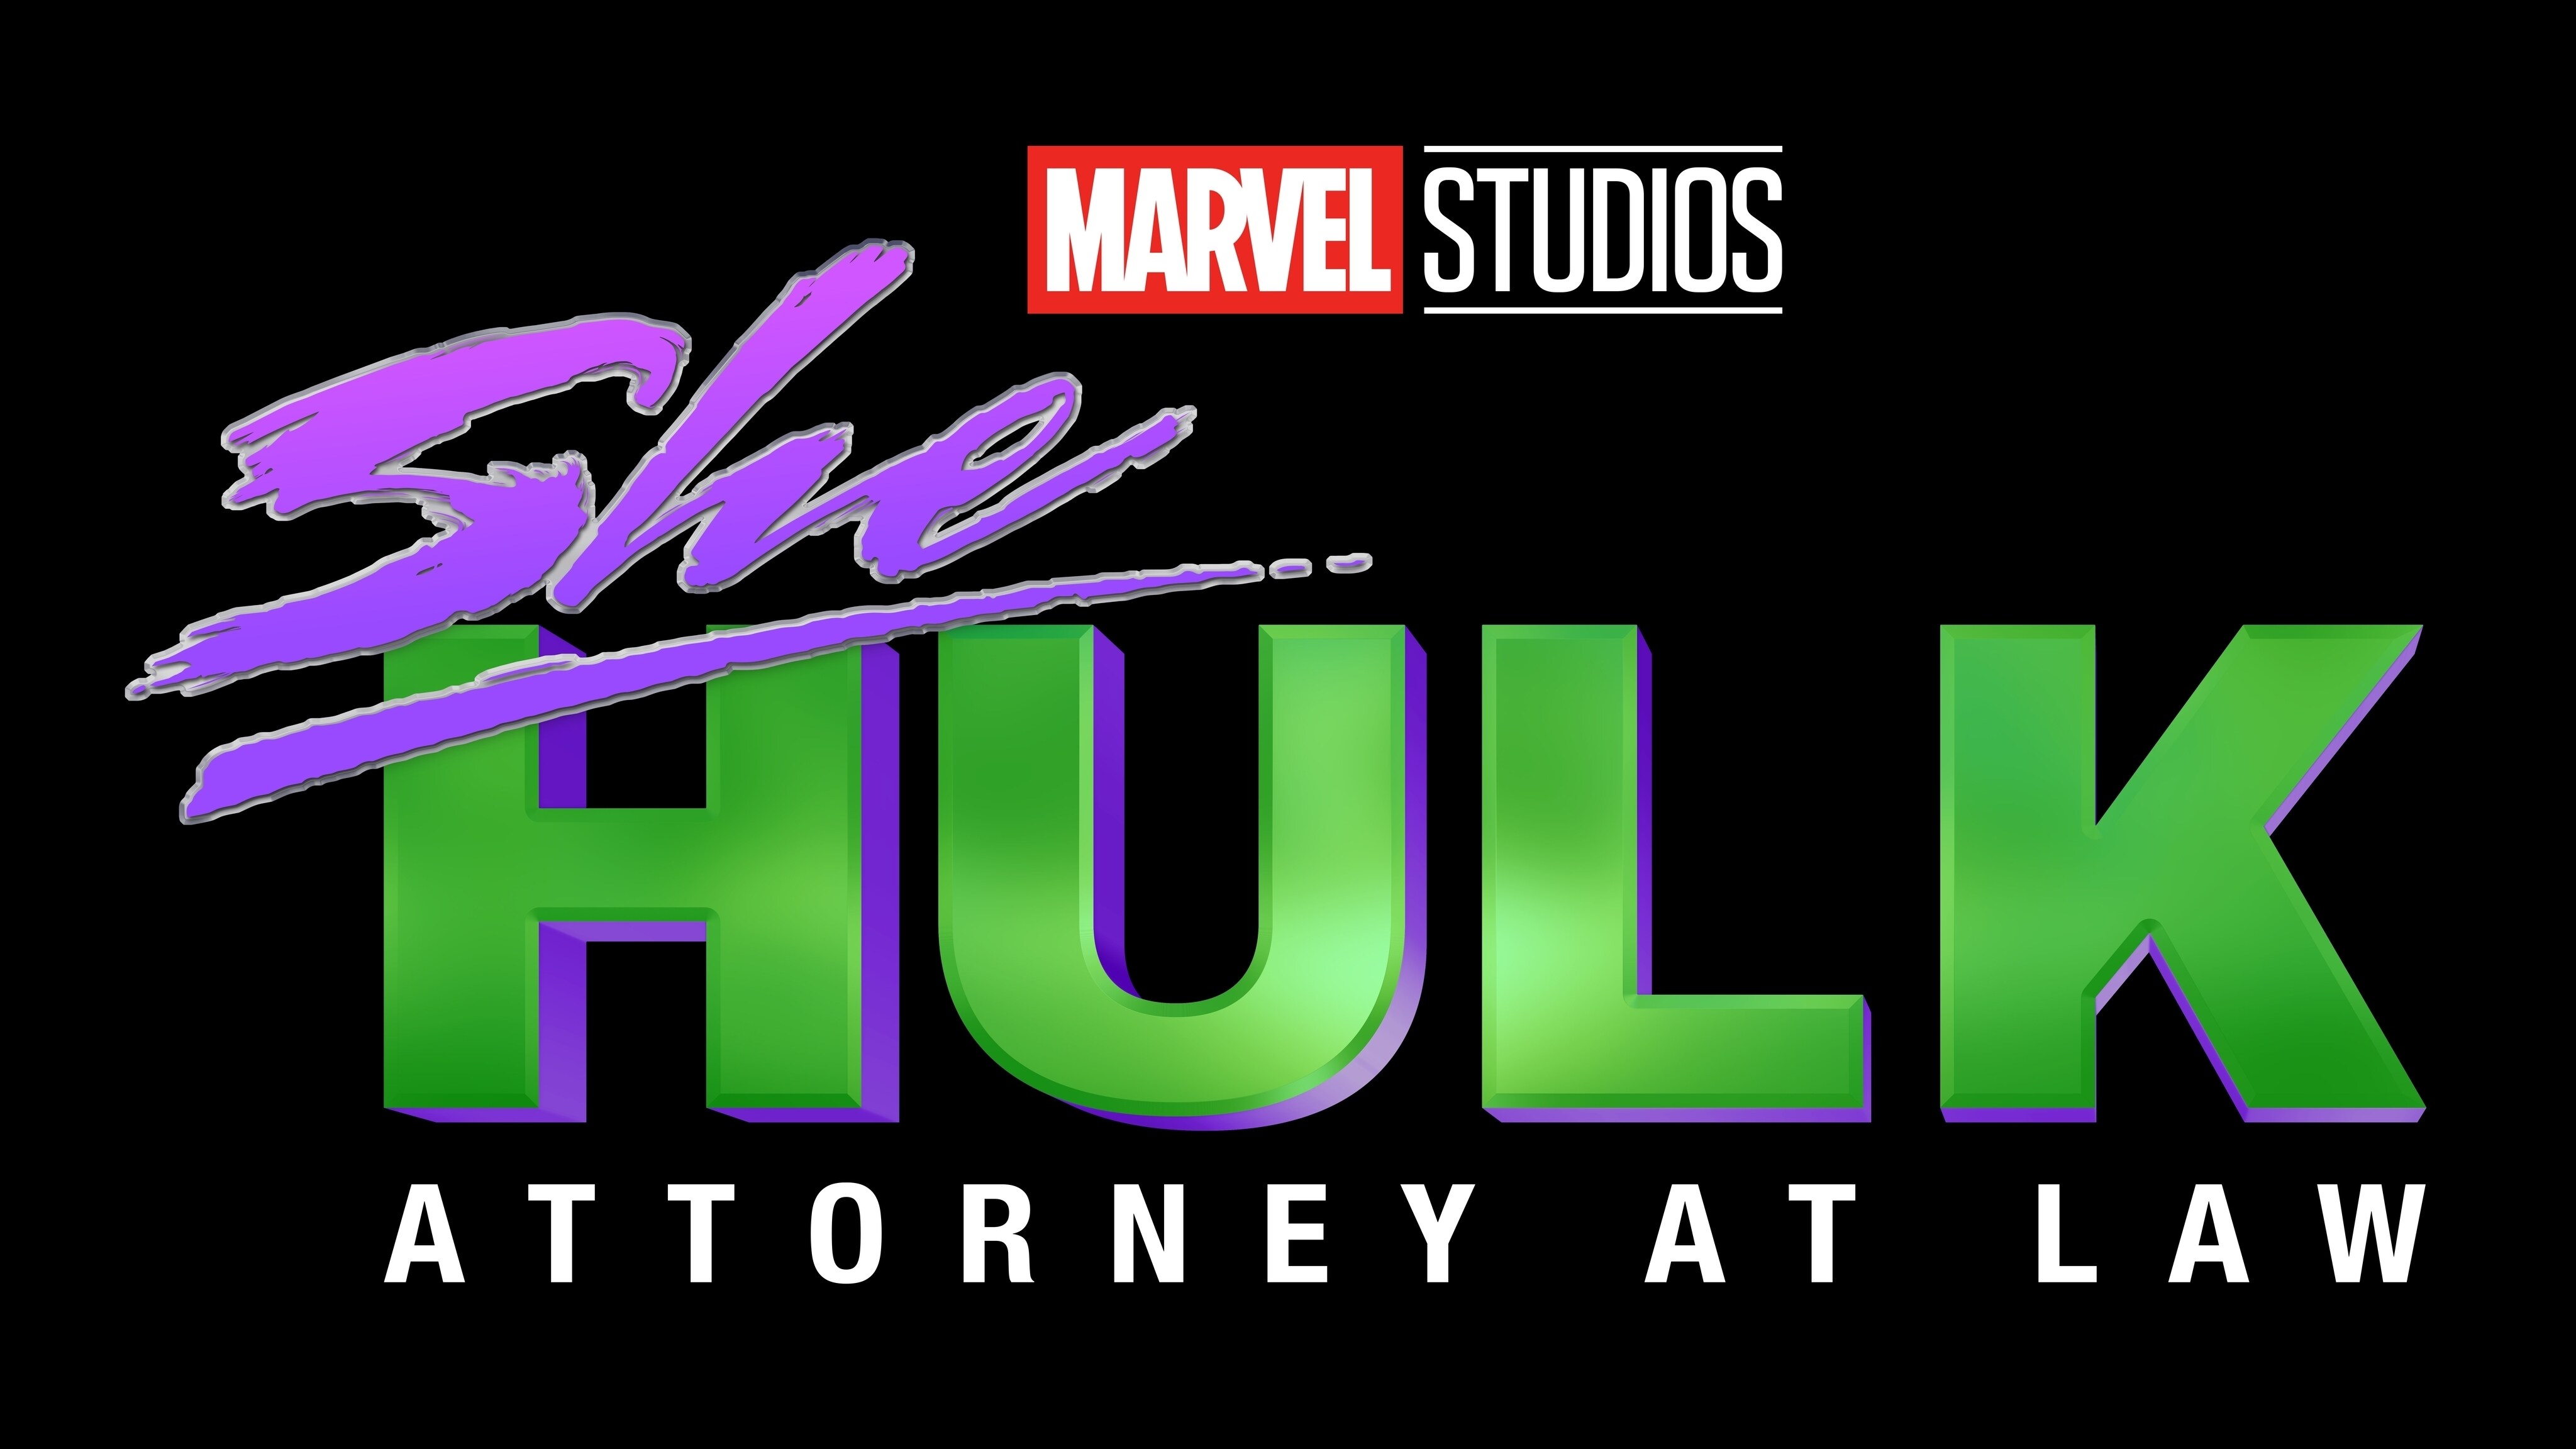 She-Hulk: Attorney at Law logo.